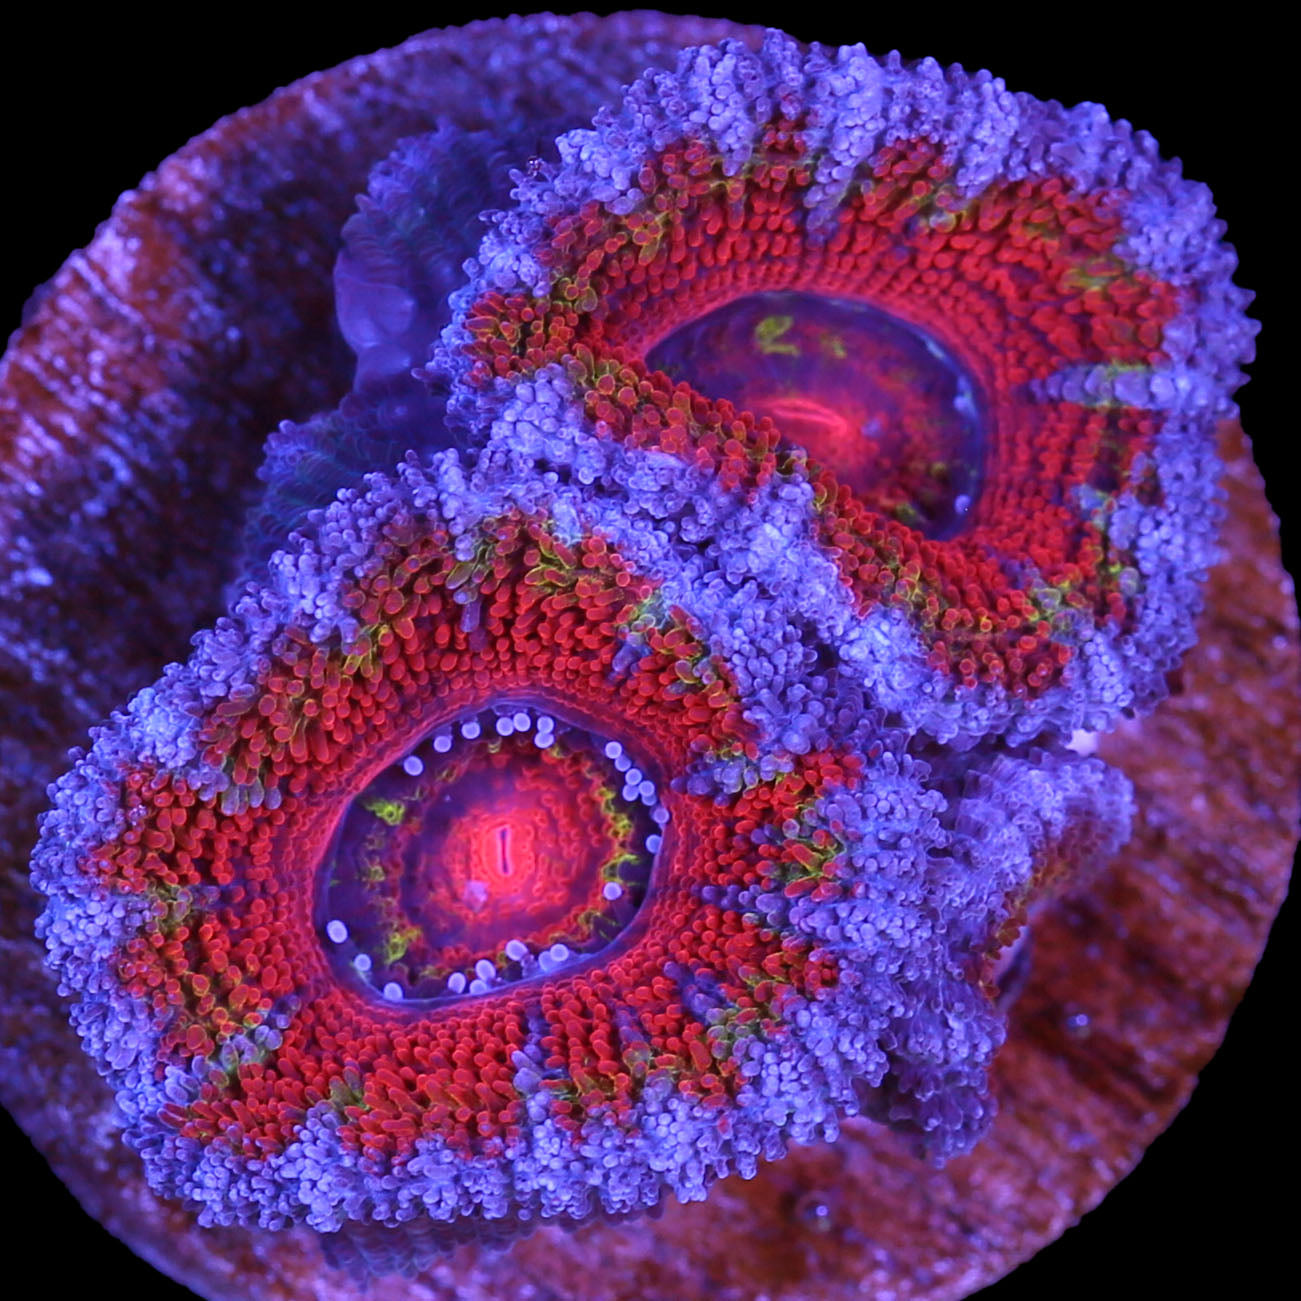 Ultra Rainbow Acan Coral